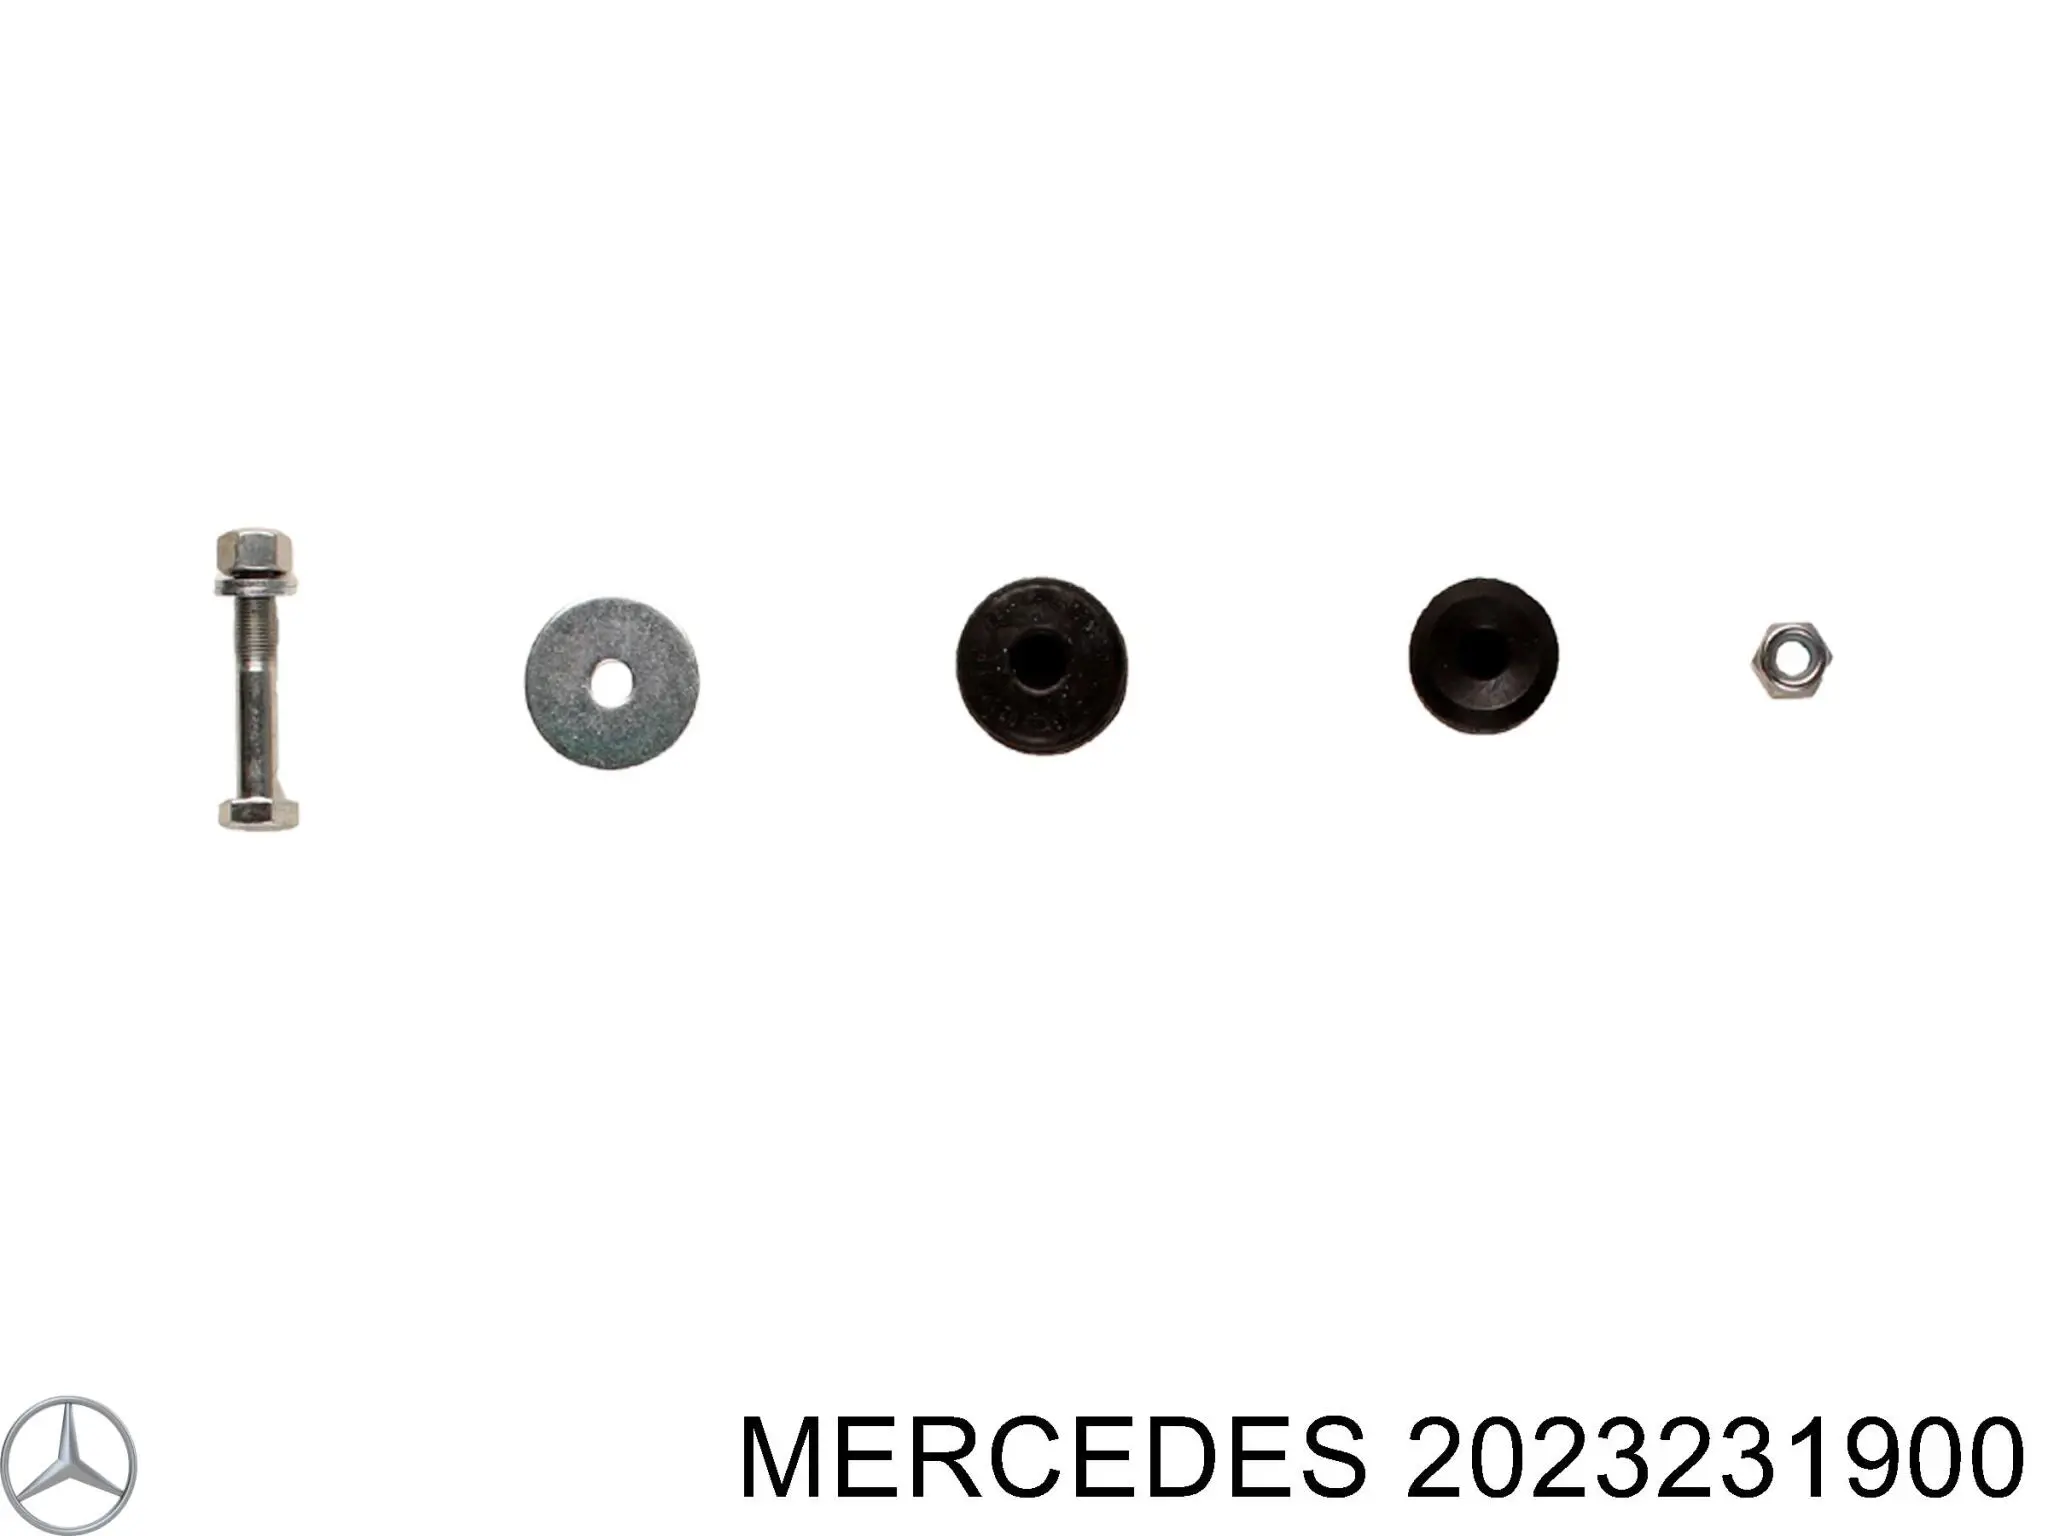 A2023231900 Mercedes 